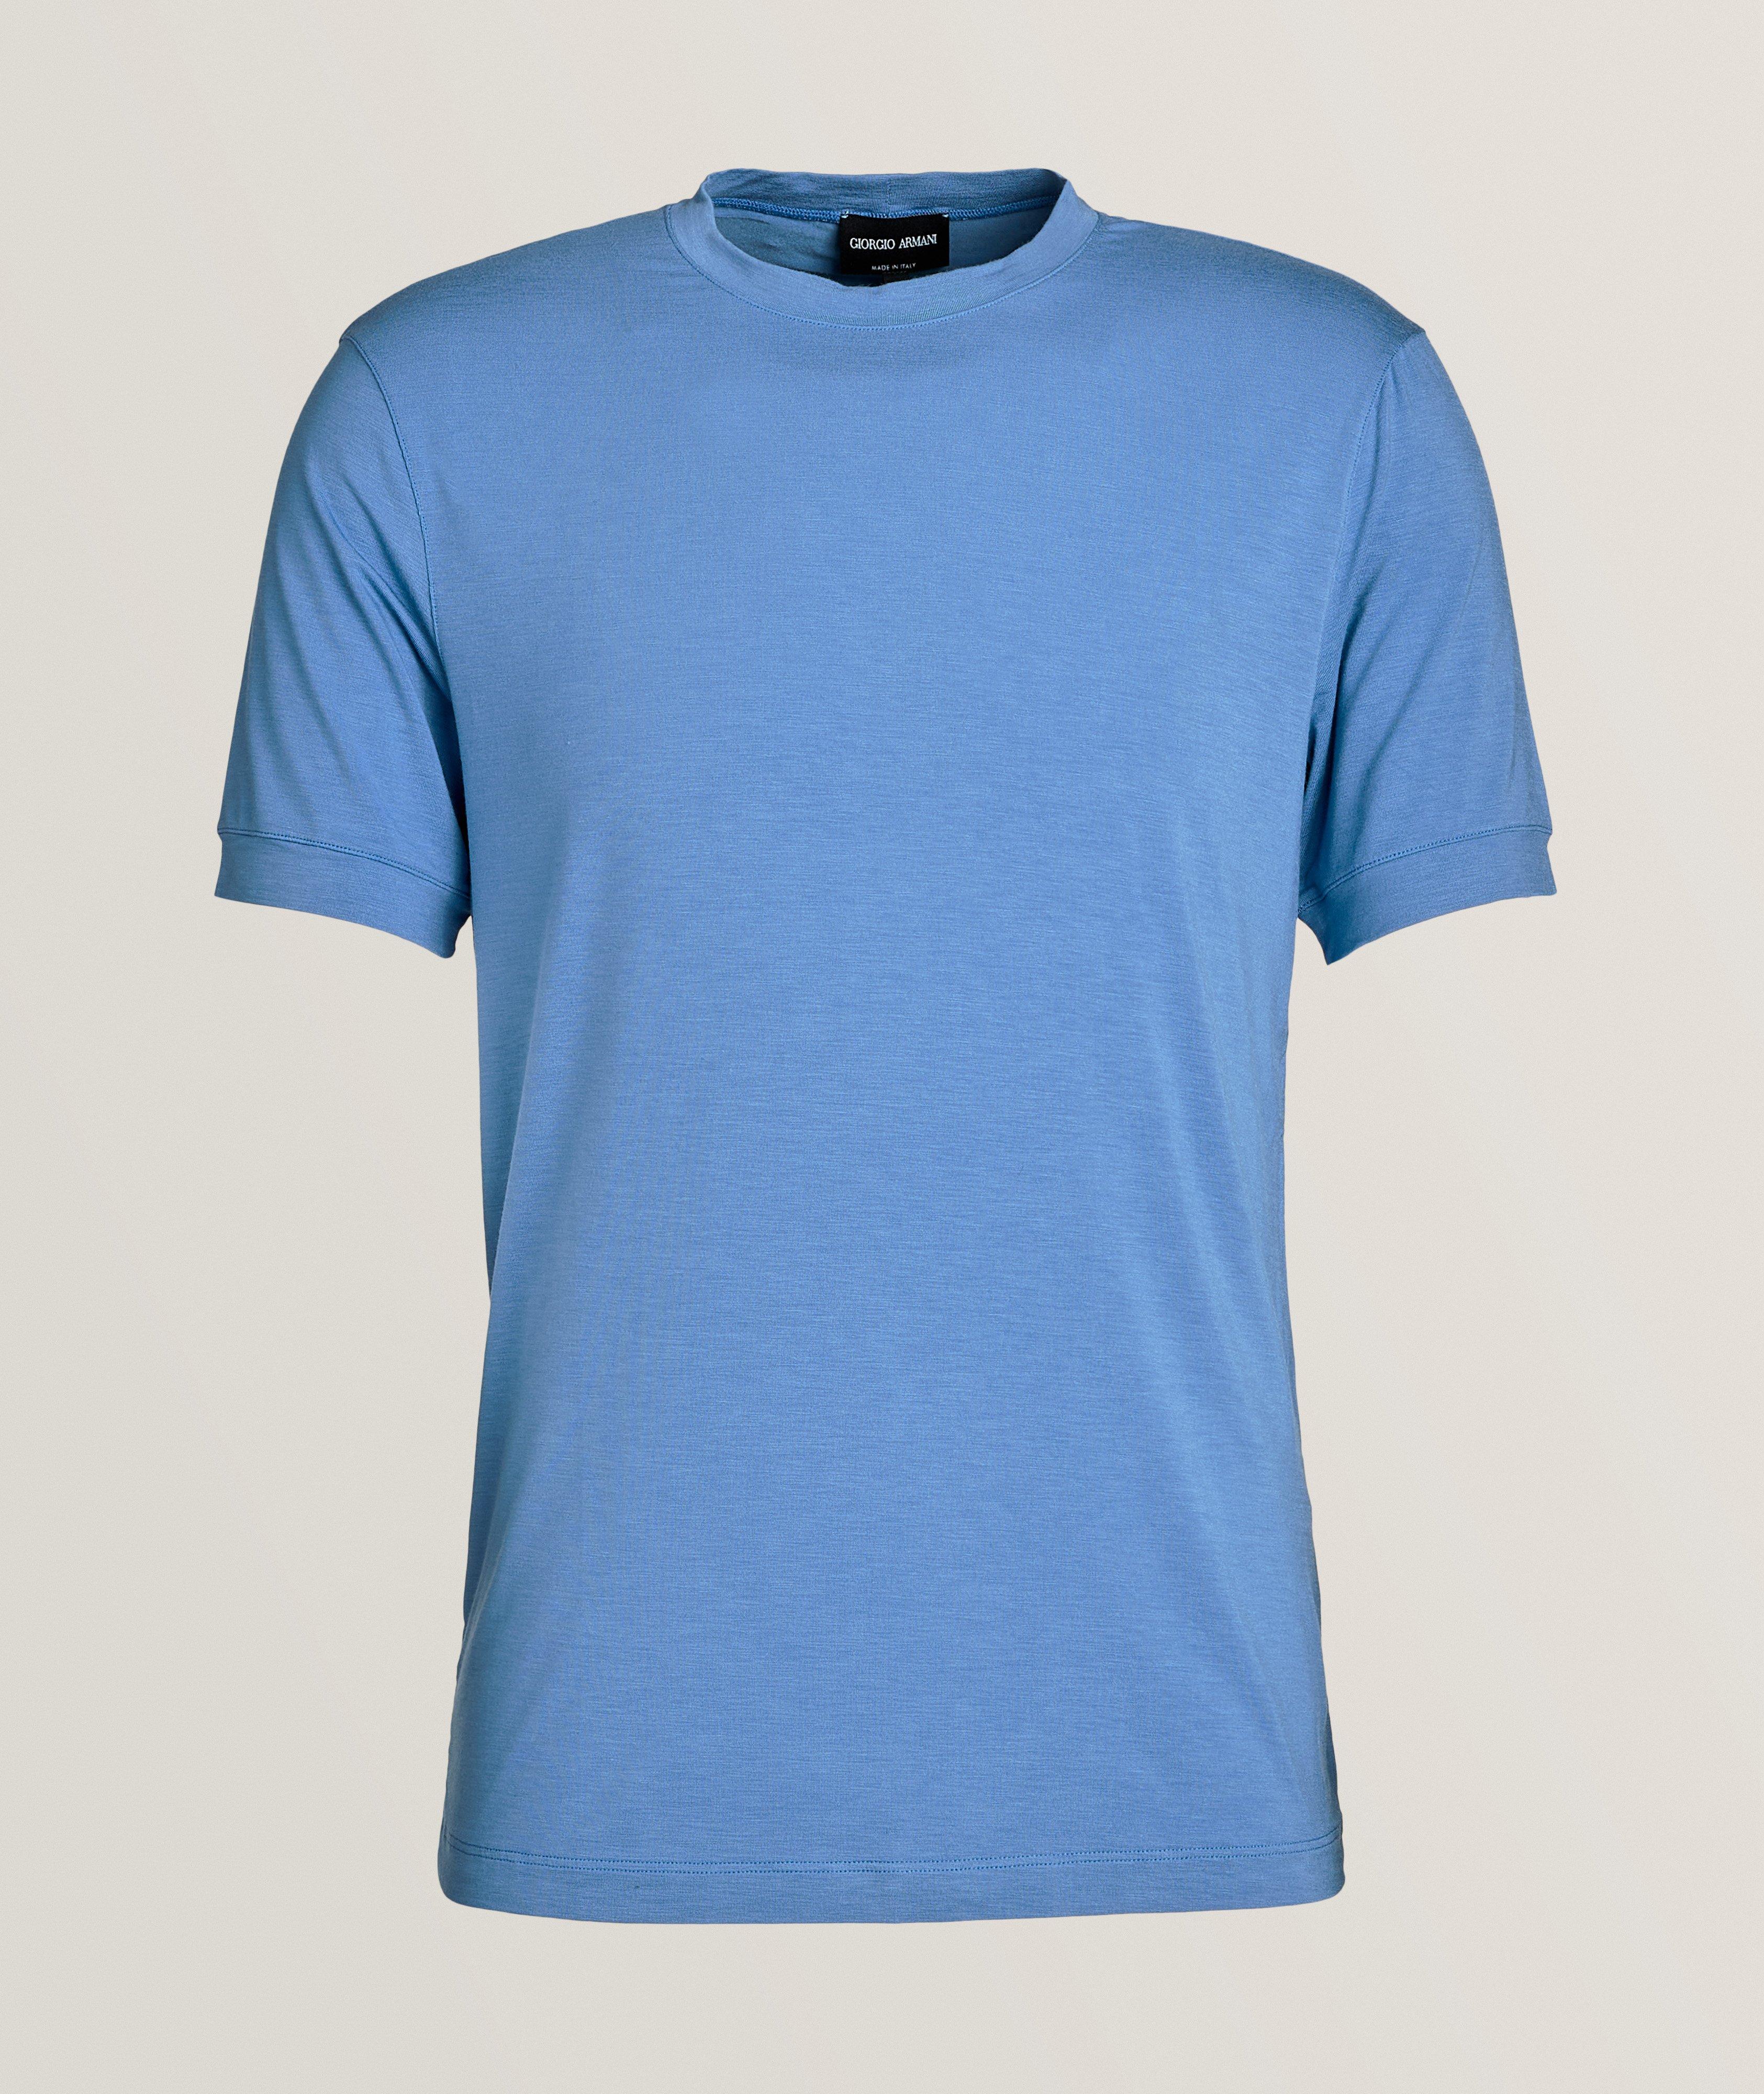 Stretch-Viscose T-Shirt image 0